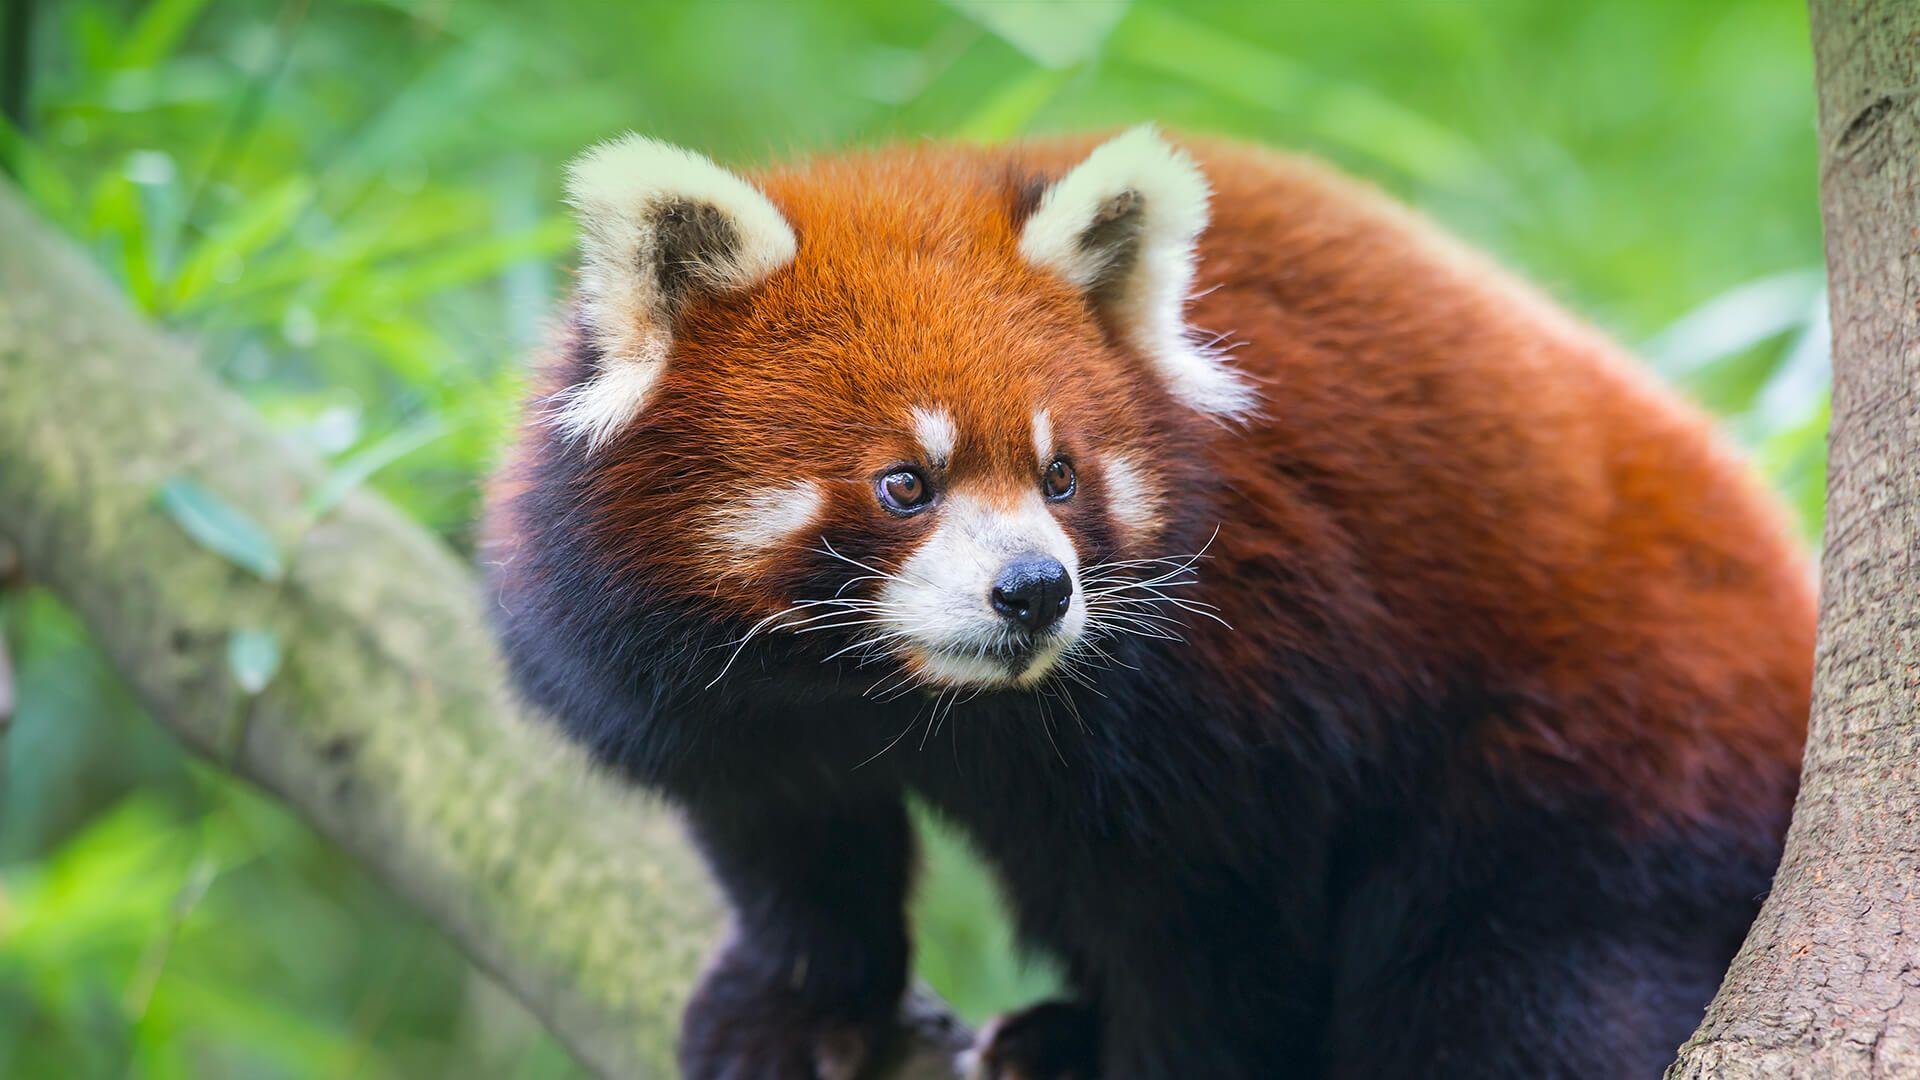 Cute Baby Red Pandas Wallpapers - Top Free Cute Baby Red Pandas ...